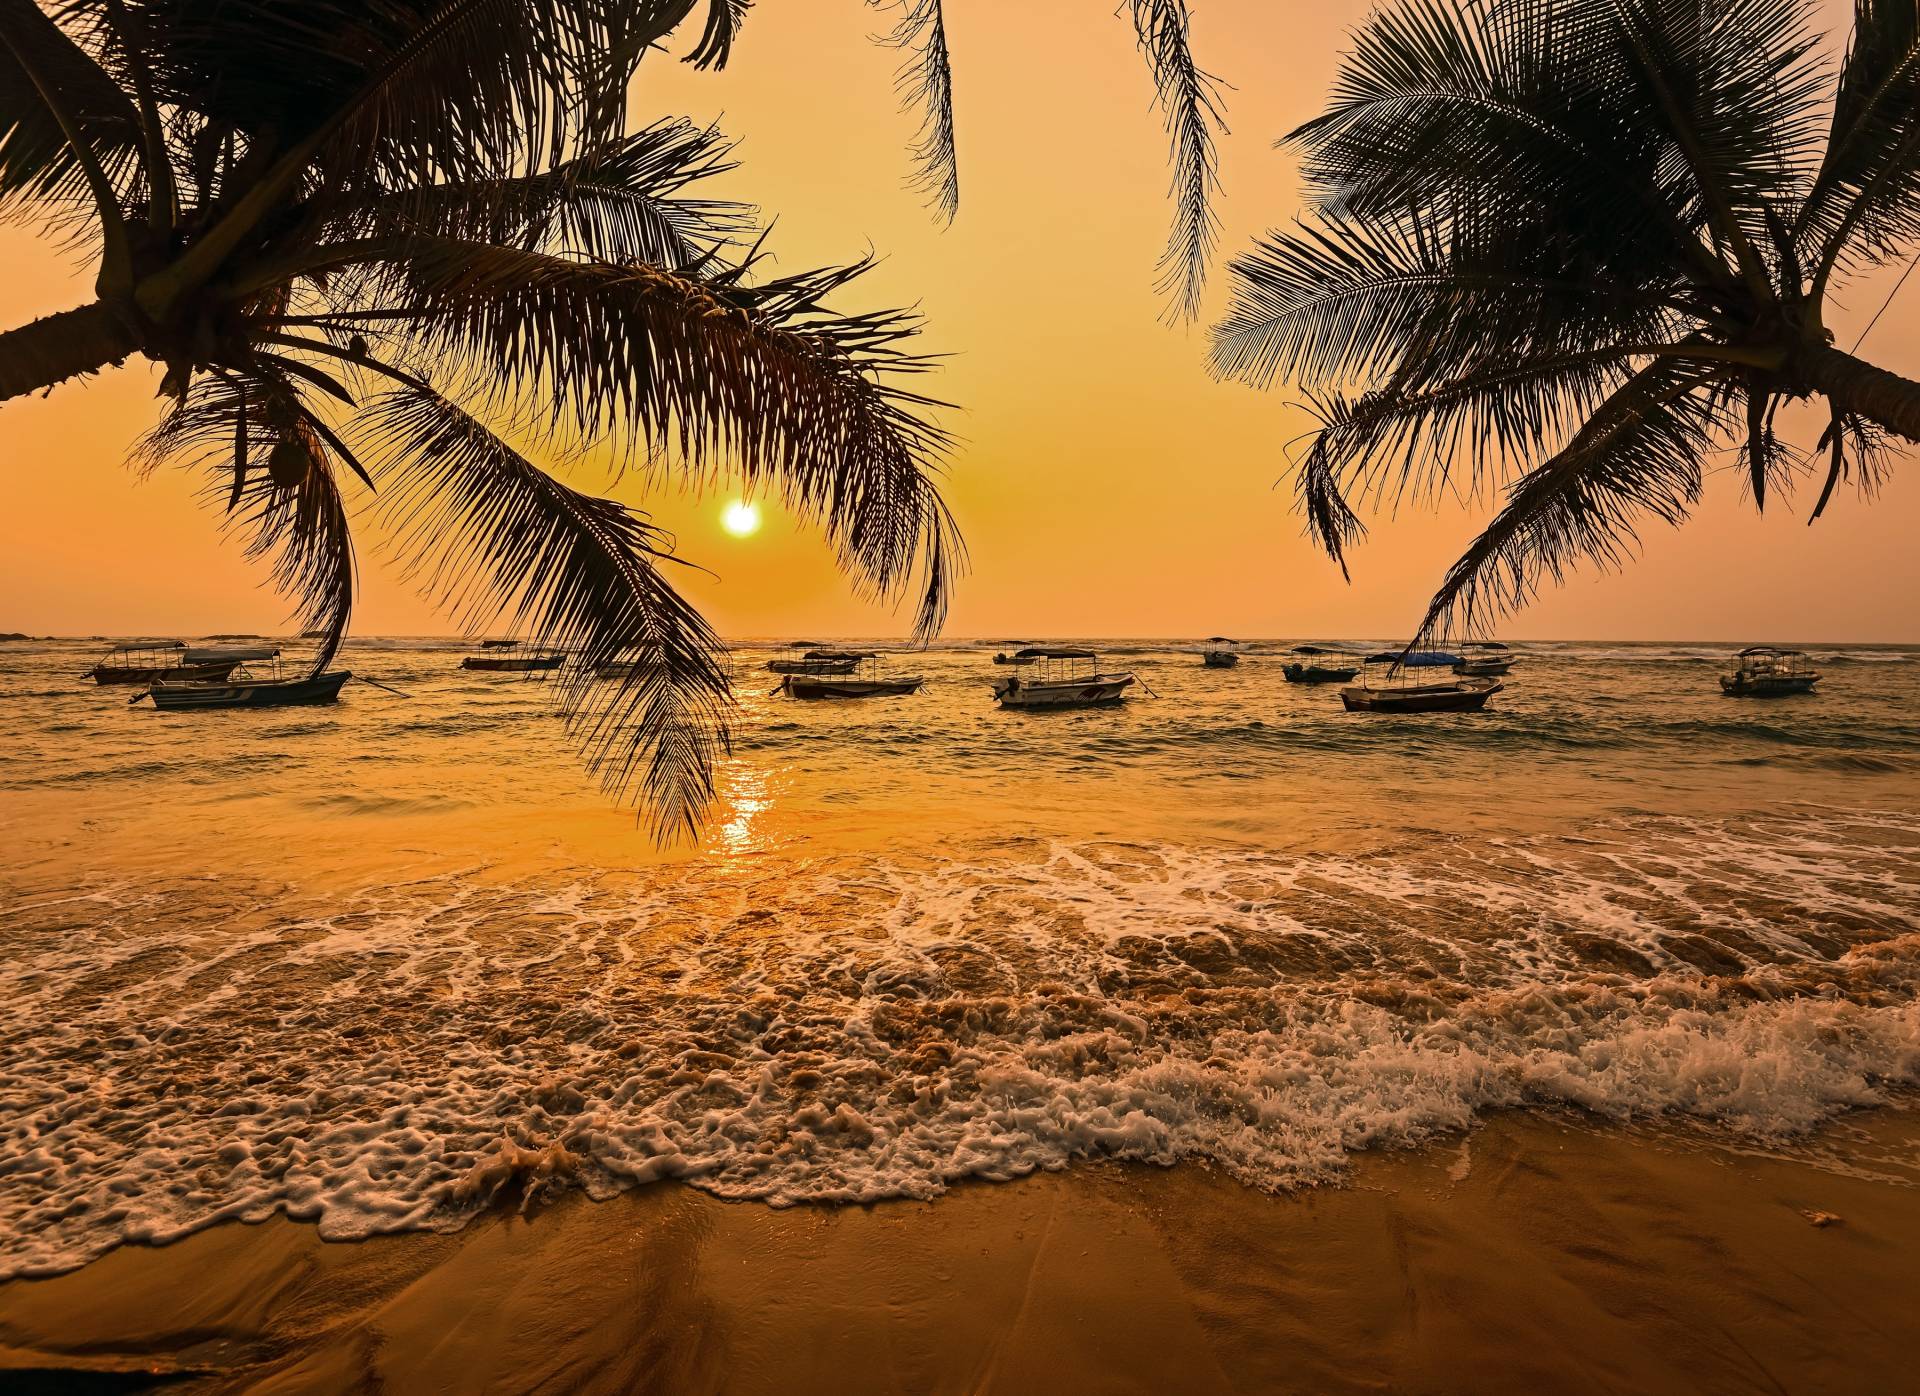 Papermoon Fototapete »Sri Lanka Palm Beach« von Papermoon